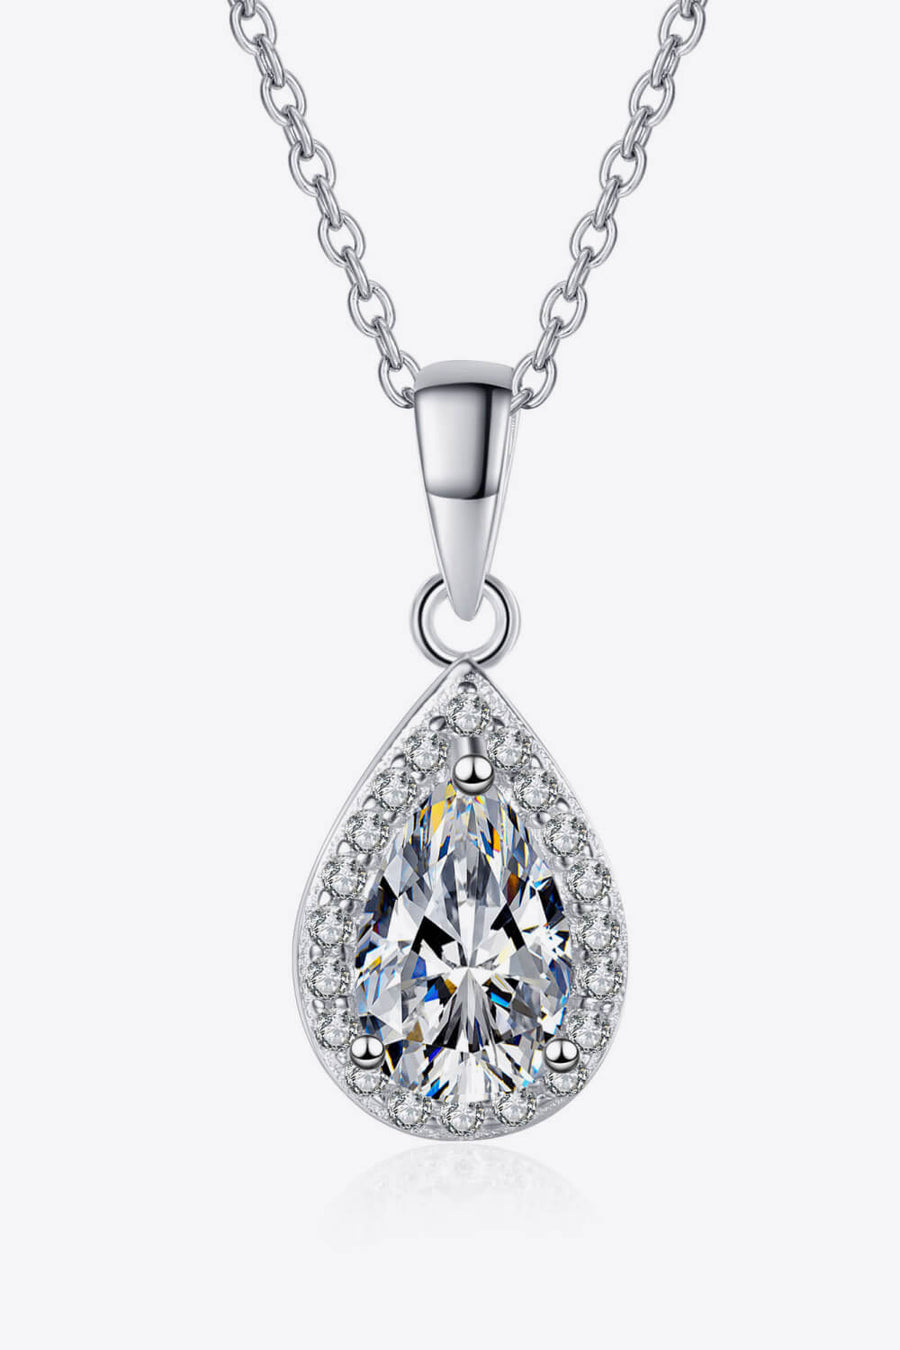 Best Diamond Necklace Jewelry Gifts for Women | 1 Carat Pear Diamond Pendant Necklace | MASON New York